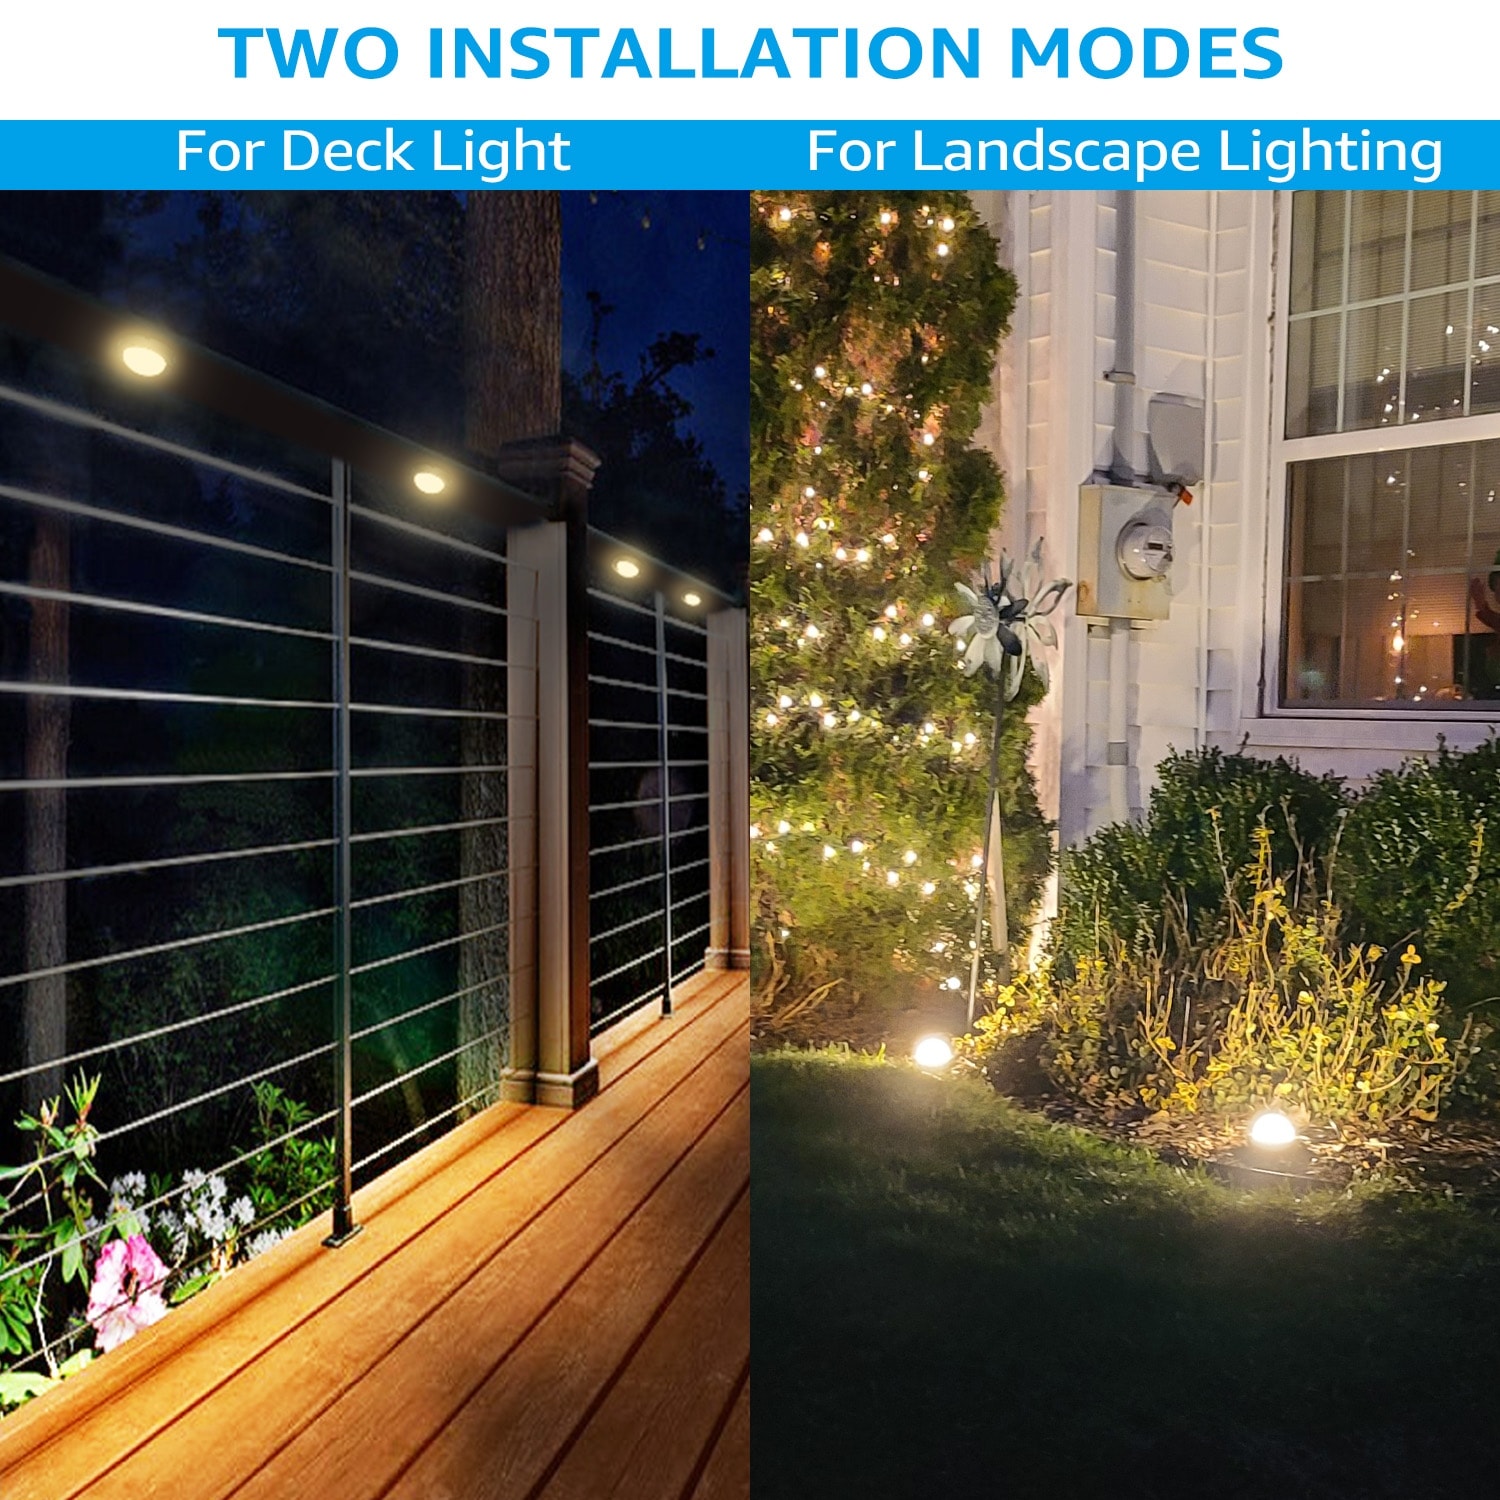 LED 4.5W Low Voltage Landscape Lights, Bush, 2700K Soft White Bed Bath   Beyond 37027404